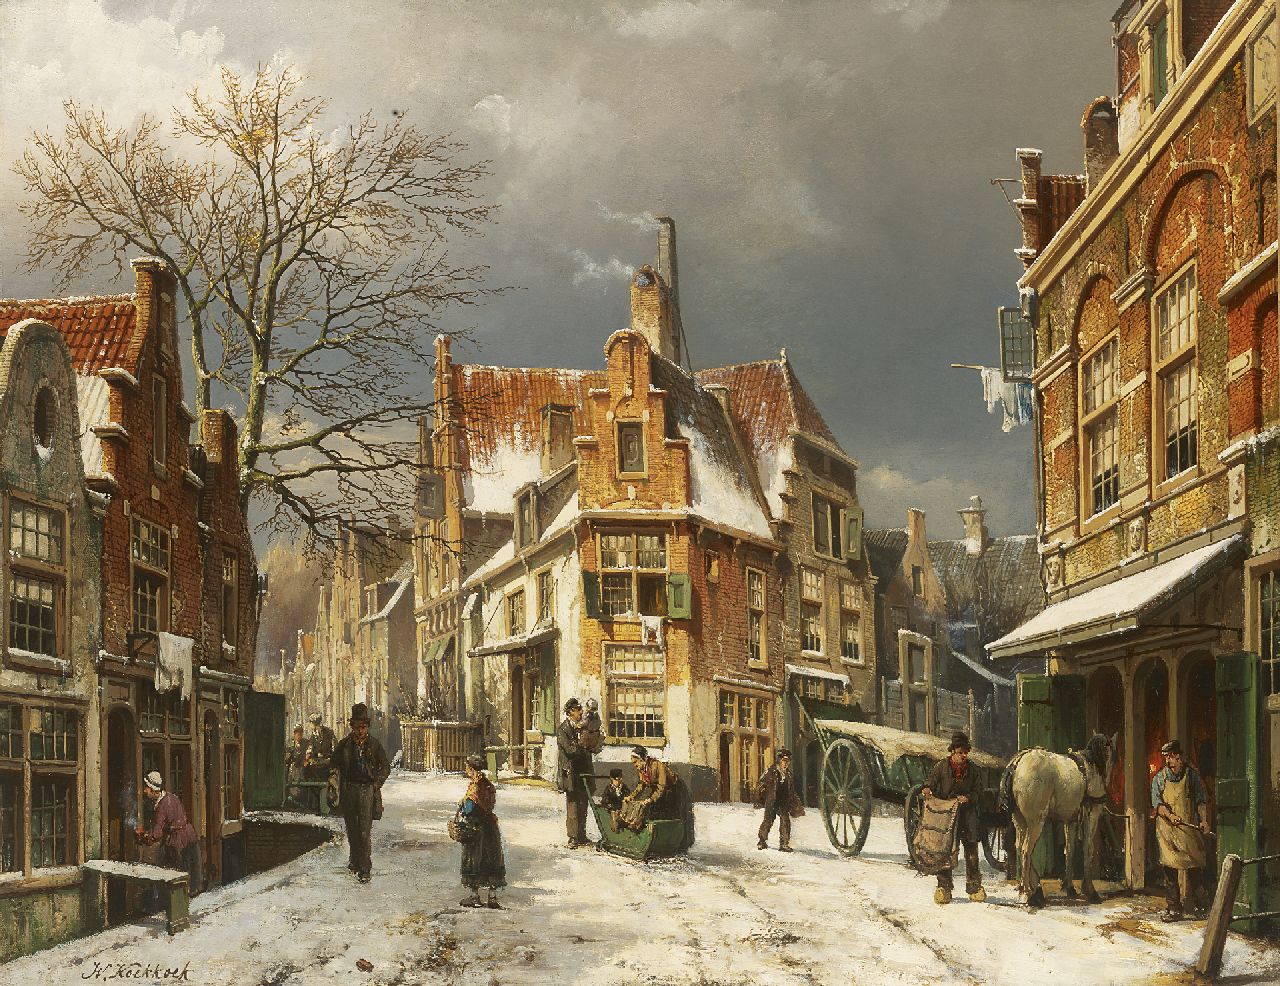 Koekkoek W.  | Willem Koekkoek, A busy day in winter in Enkhuizen, Öl auf Leinwand 54,3 x 69,6 cm, signed l.l. und dated 13 januari 1892 on label on stretcher